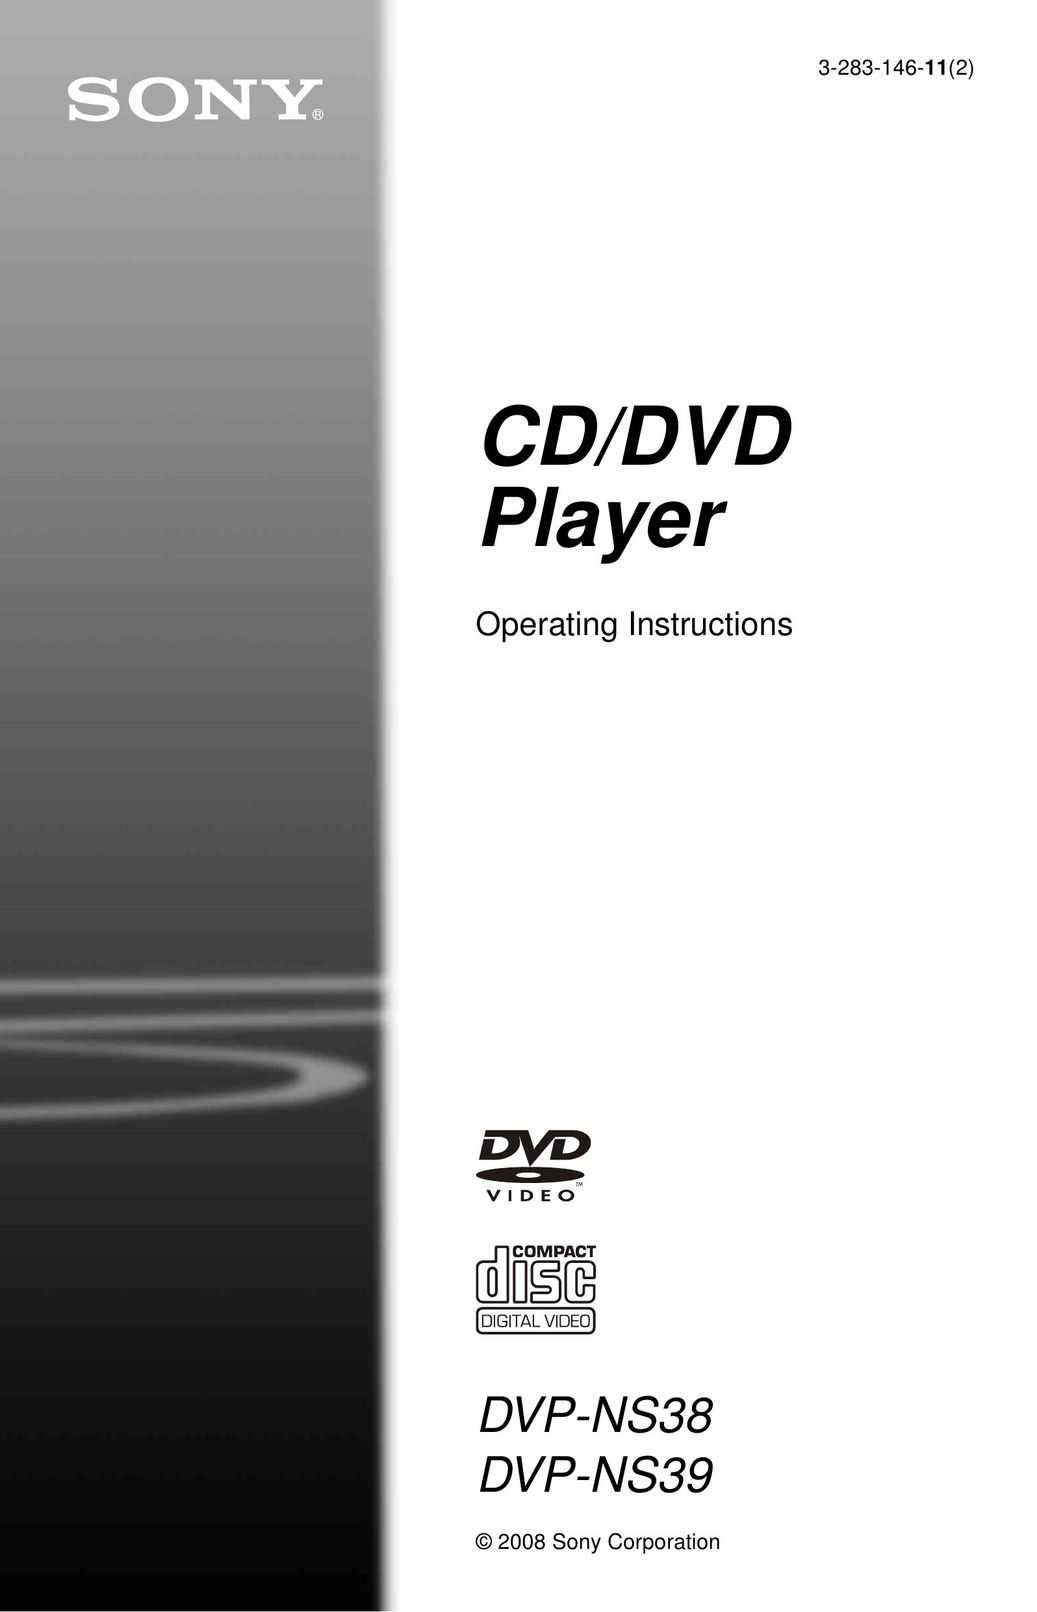 Sony 3-283-146-11(2) DVD Player User Manual